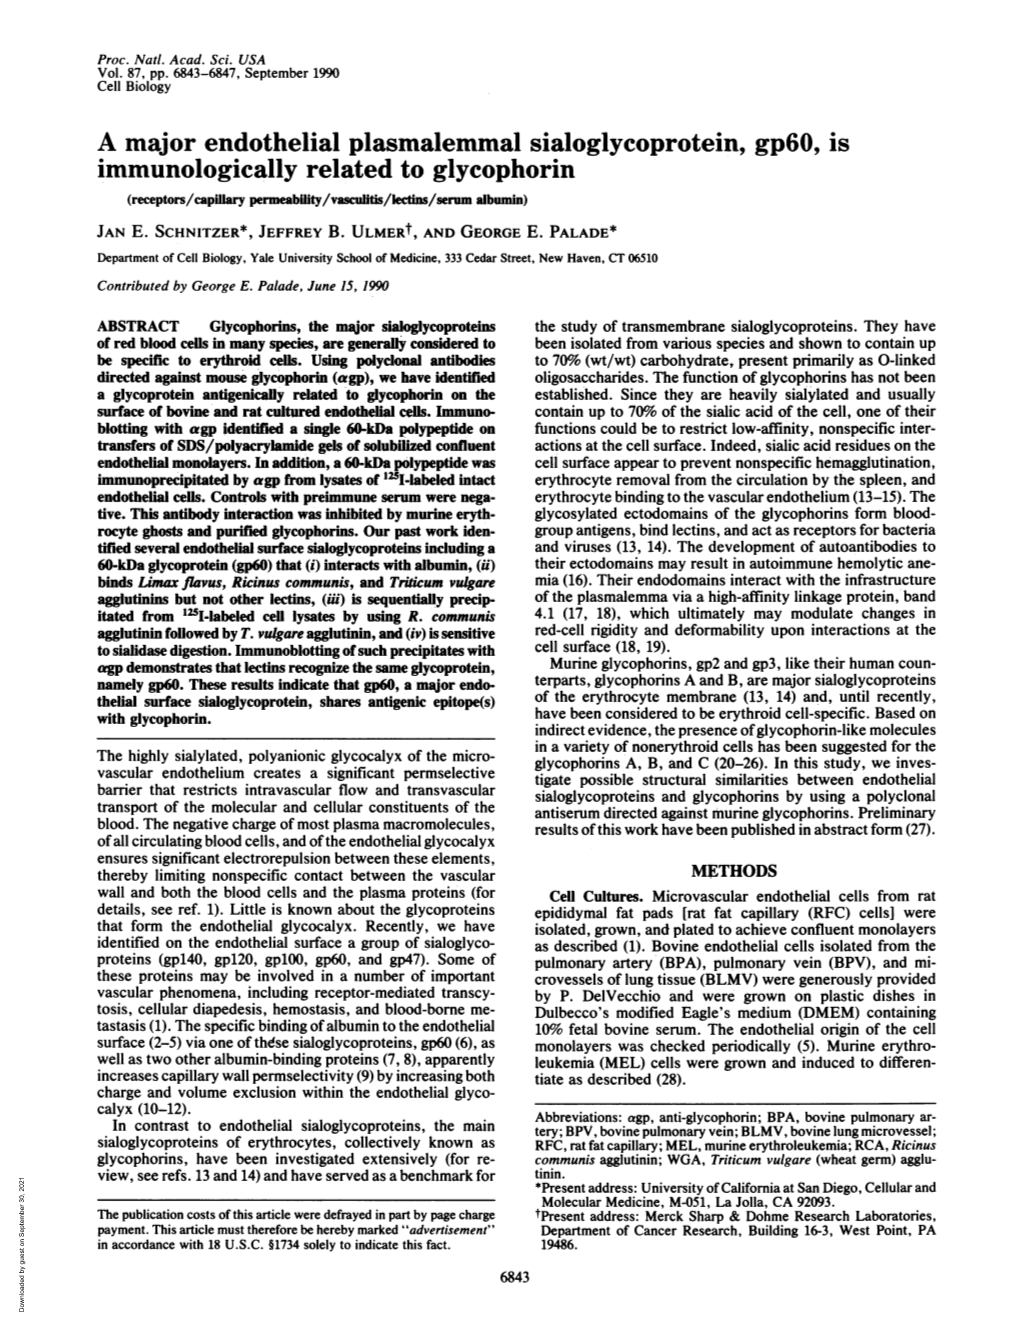 A Major Endothelial Plasmalemmal Sialoglycoprotein, Gp6o, Is